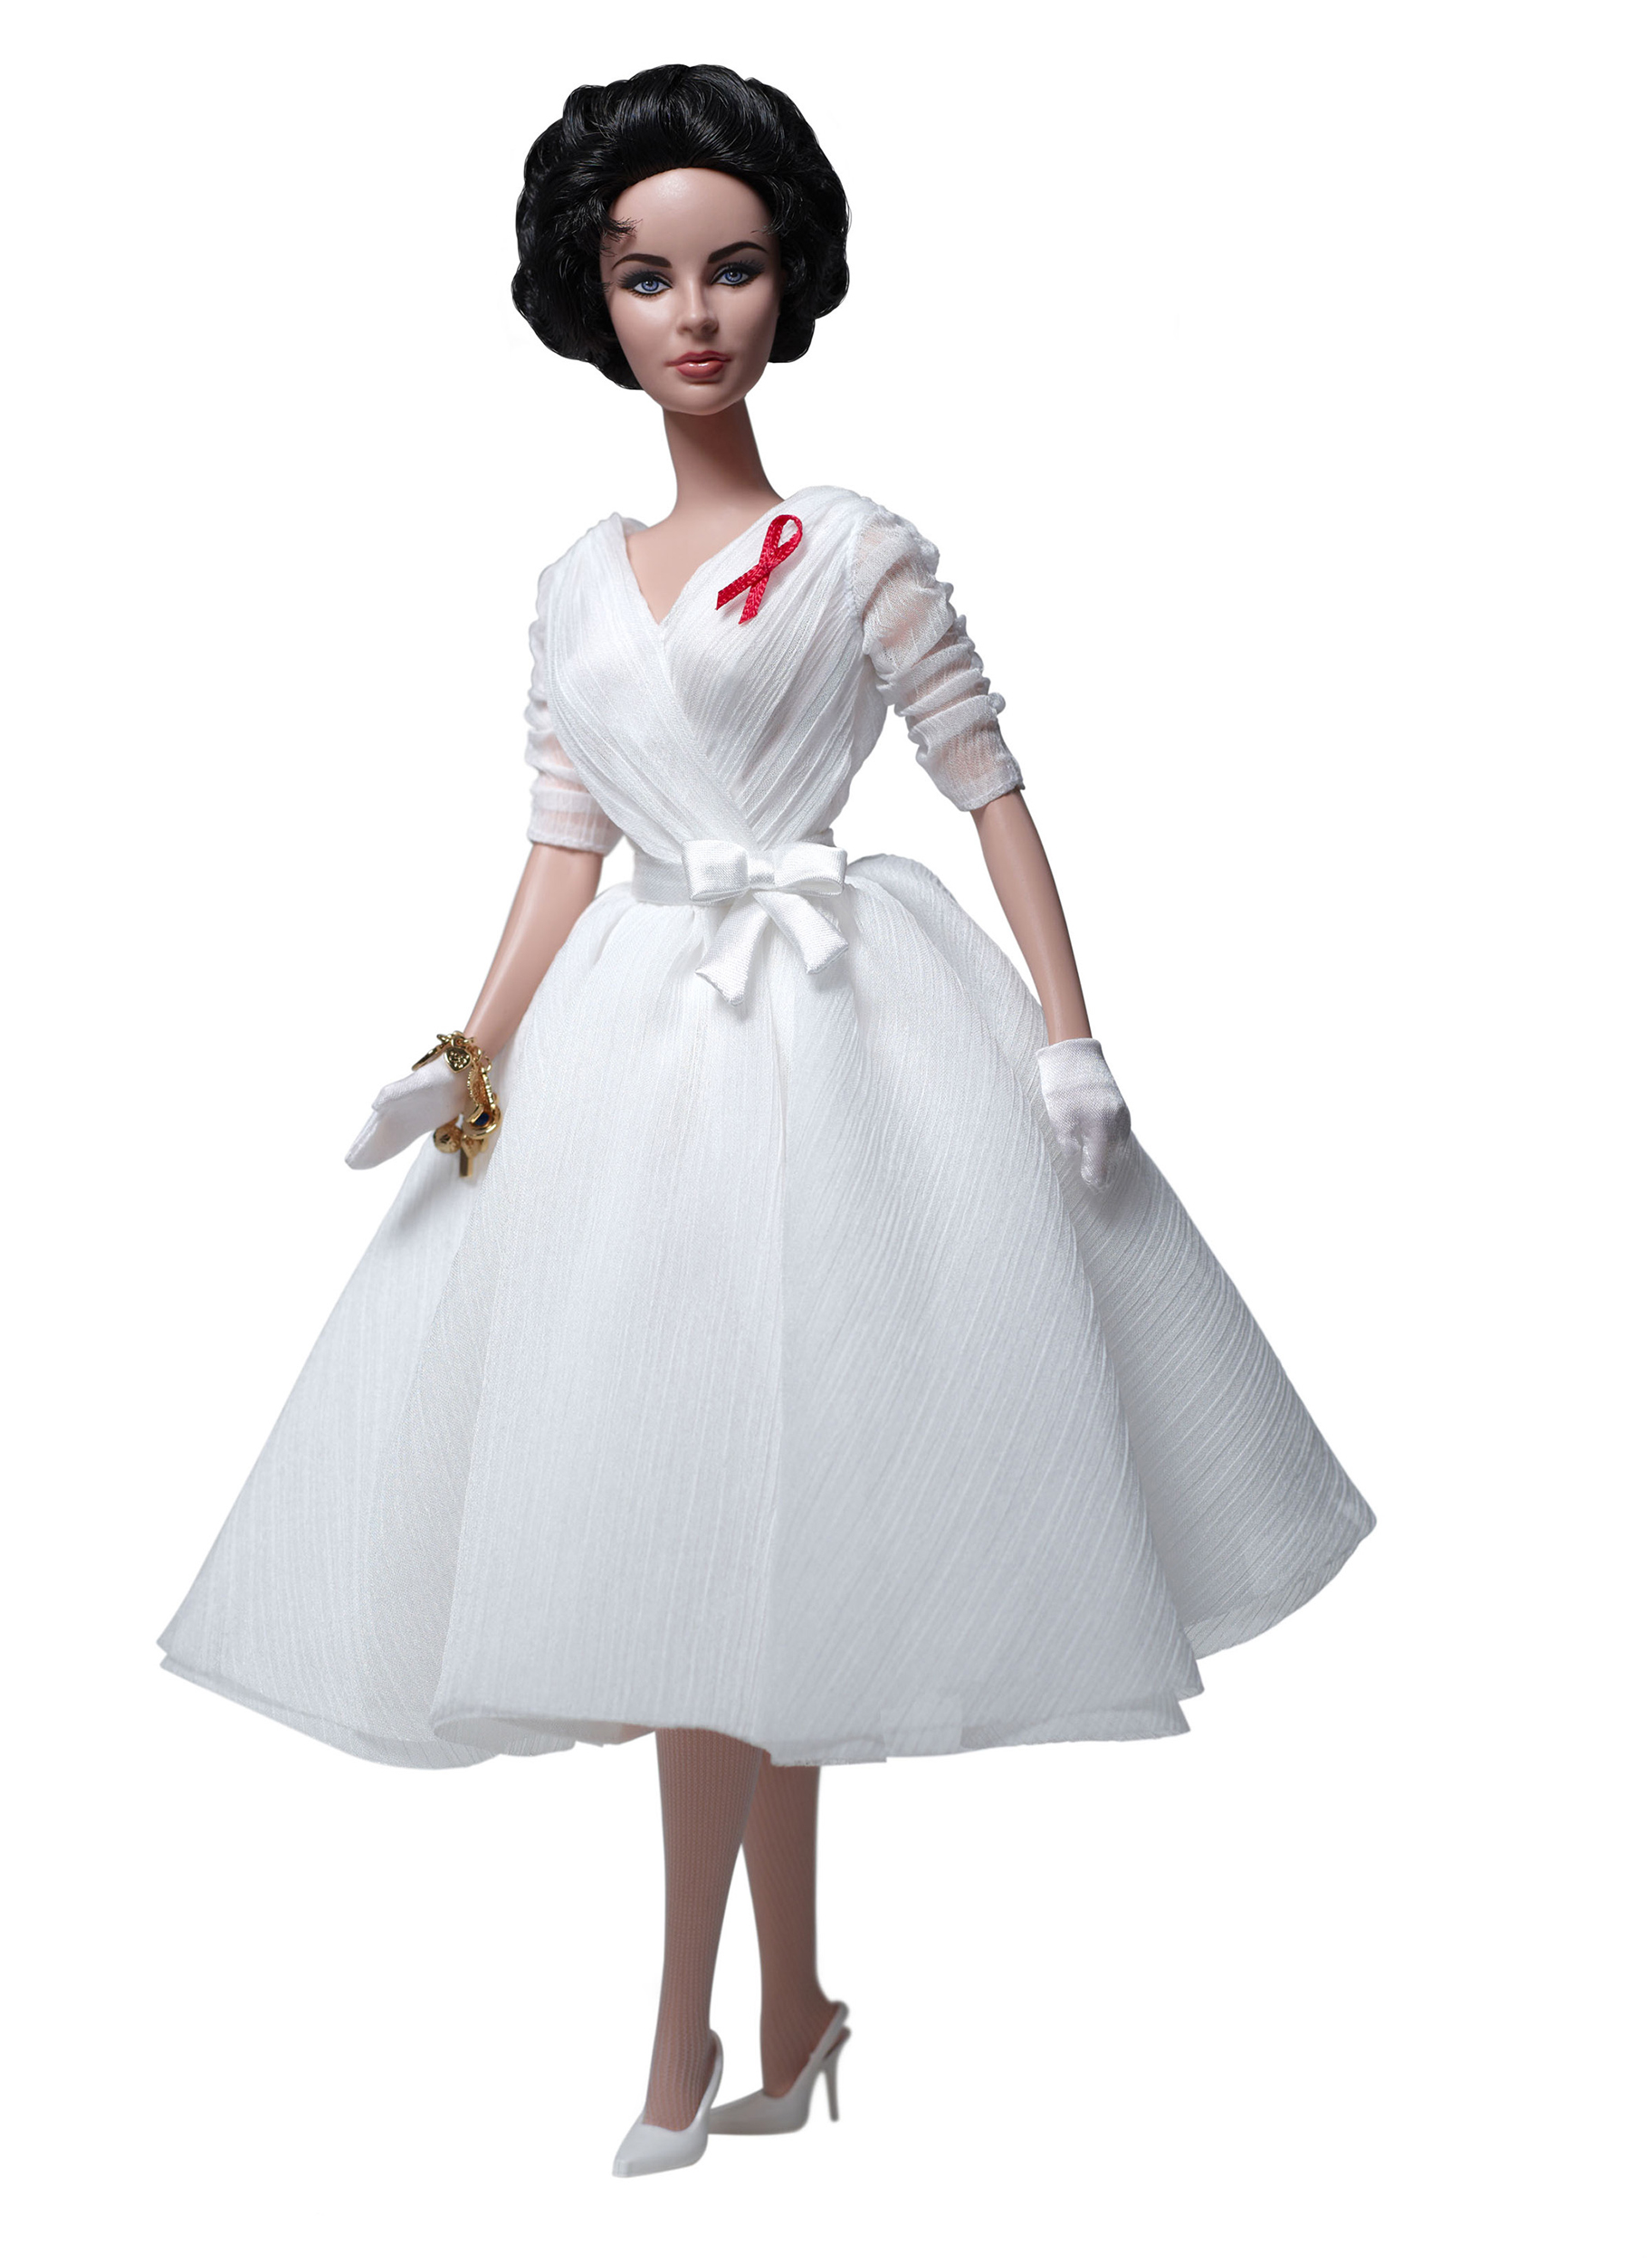 The Elizabeth Taylor White Diamonds Barbie, released in 2012.